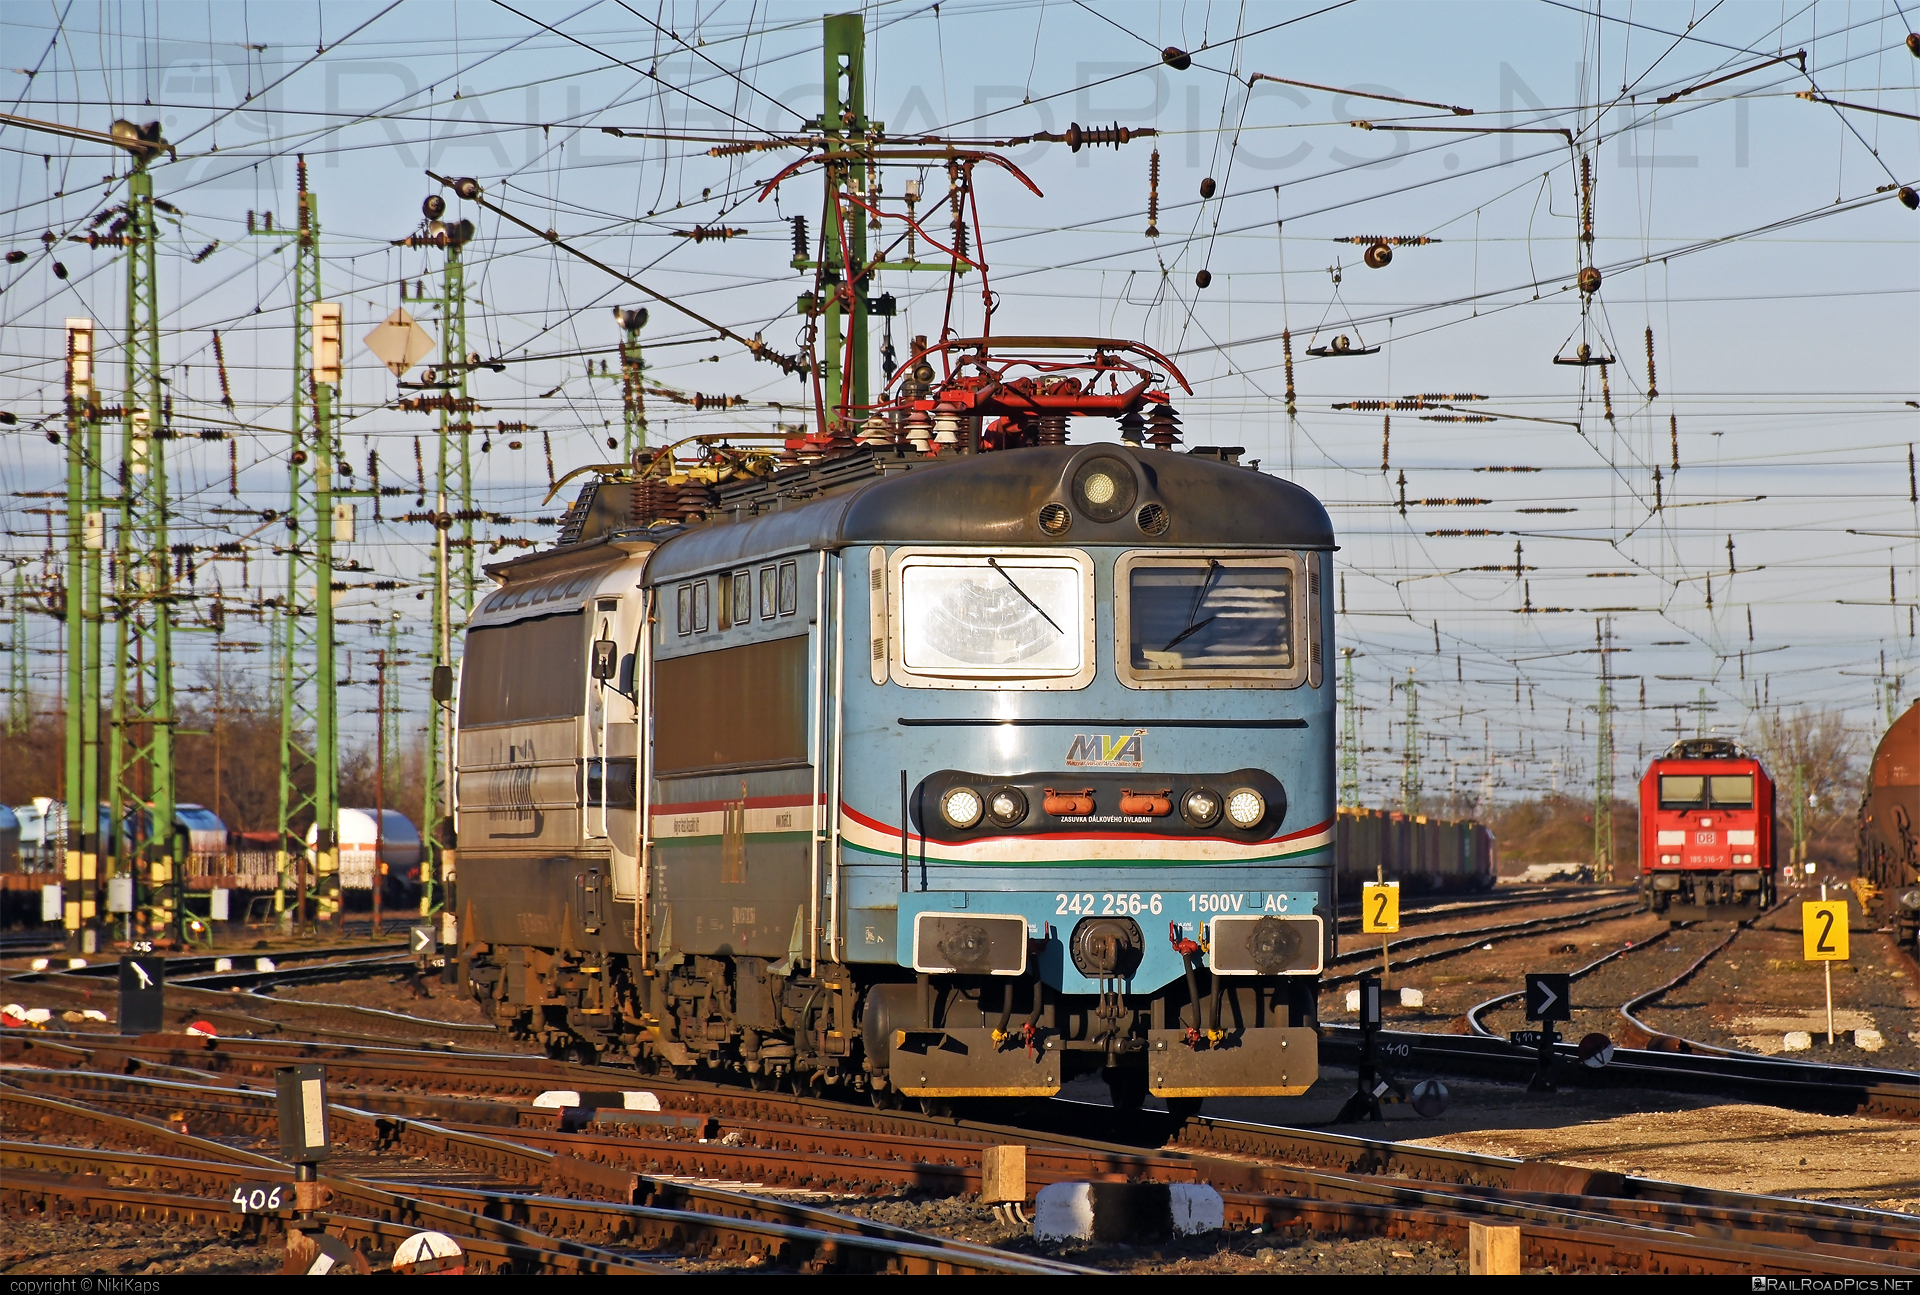 Škoda 73E - 242 256-6 operated by Magyar Vasúti Árúszállító Kft. #locomotive242 #magyarvasutiaruszallito #mva #plechac #skoda #skoda73e